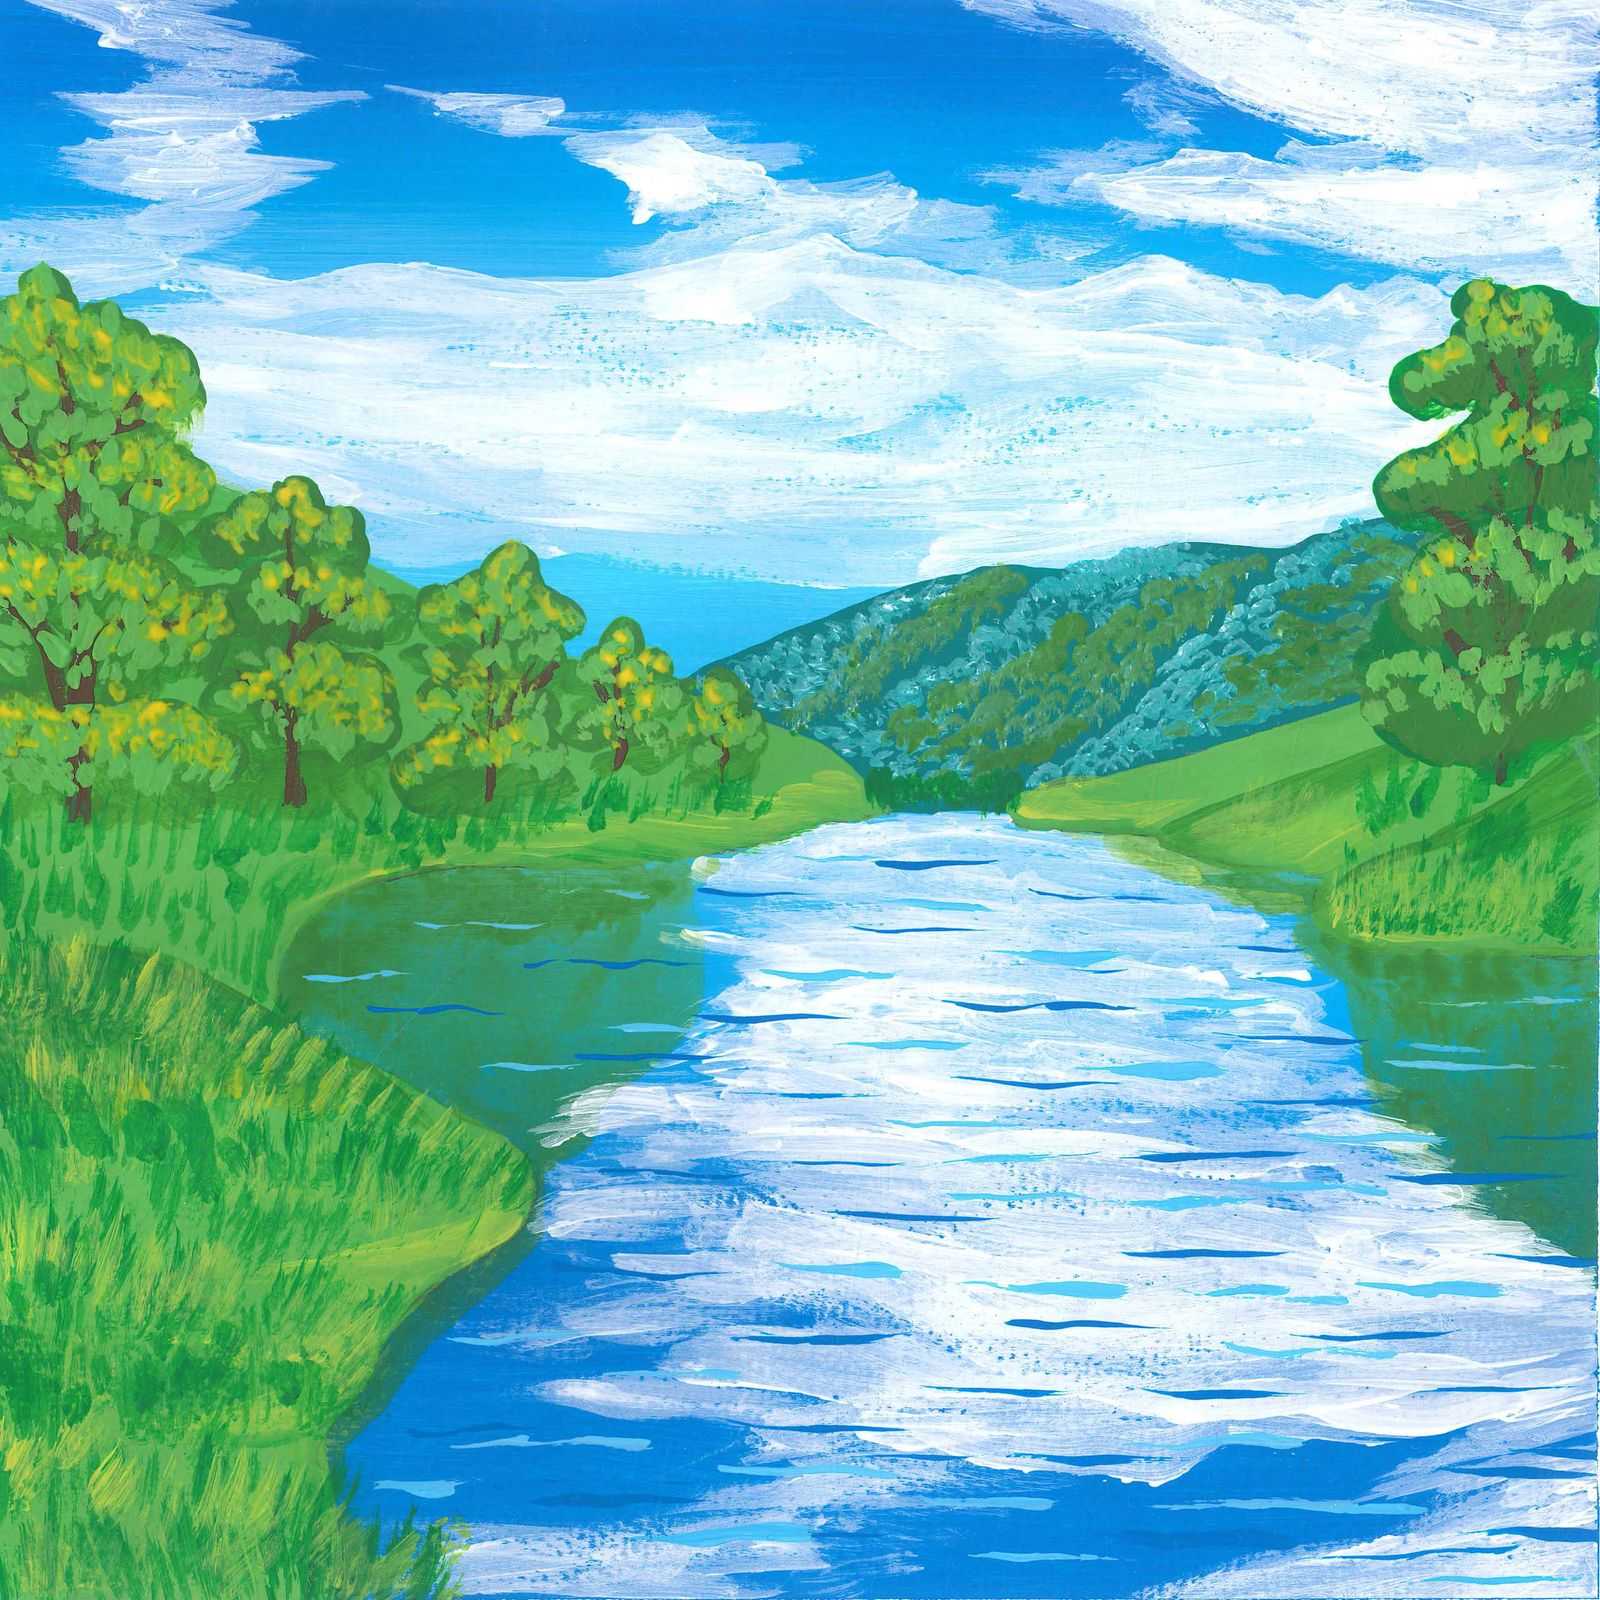 River Godavari - nature landscape painting - earth.fm